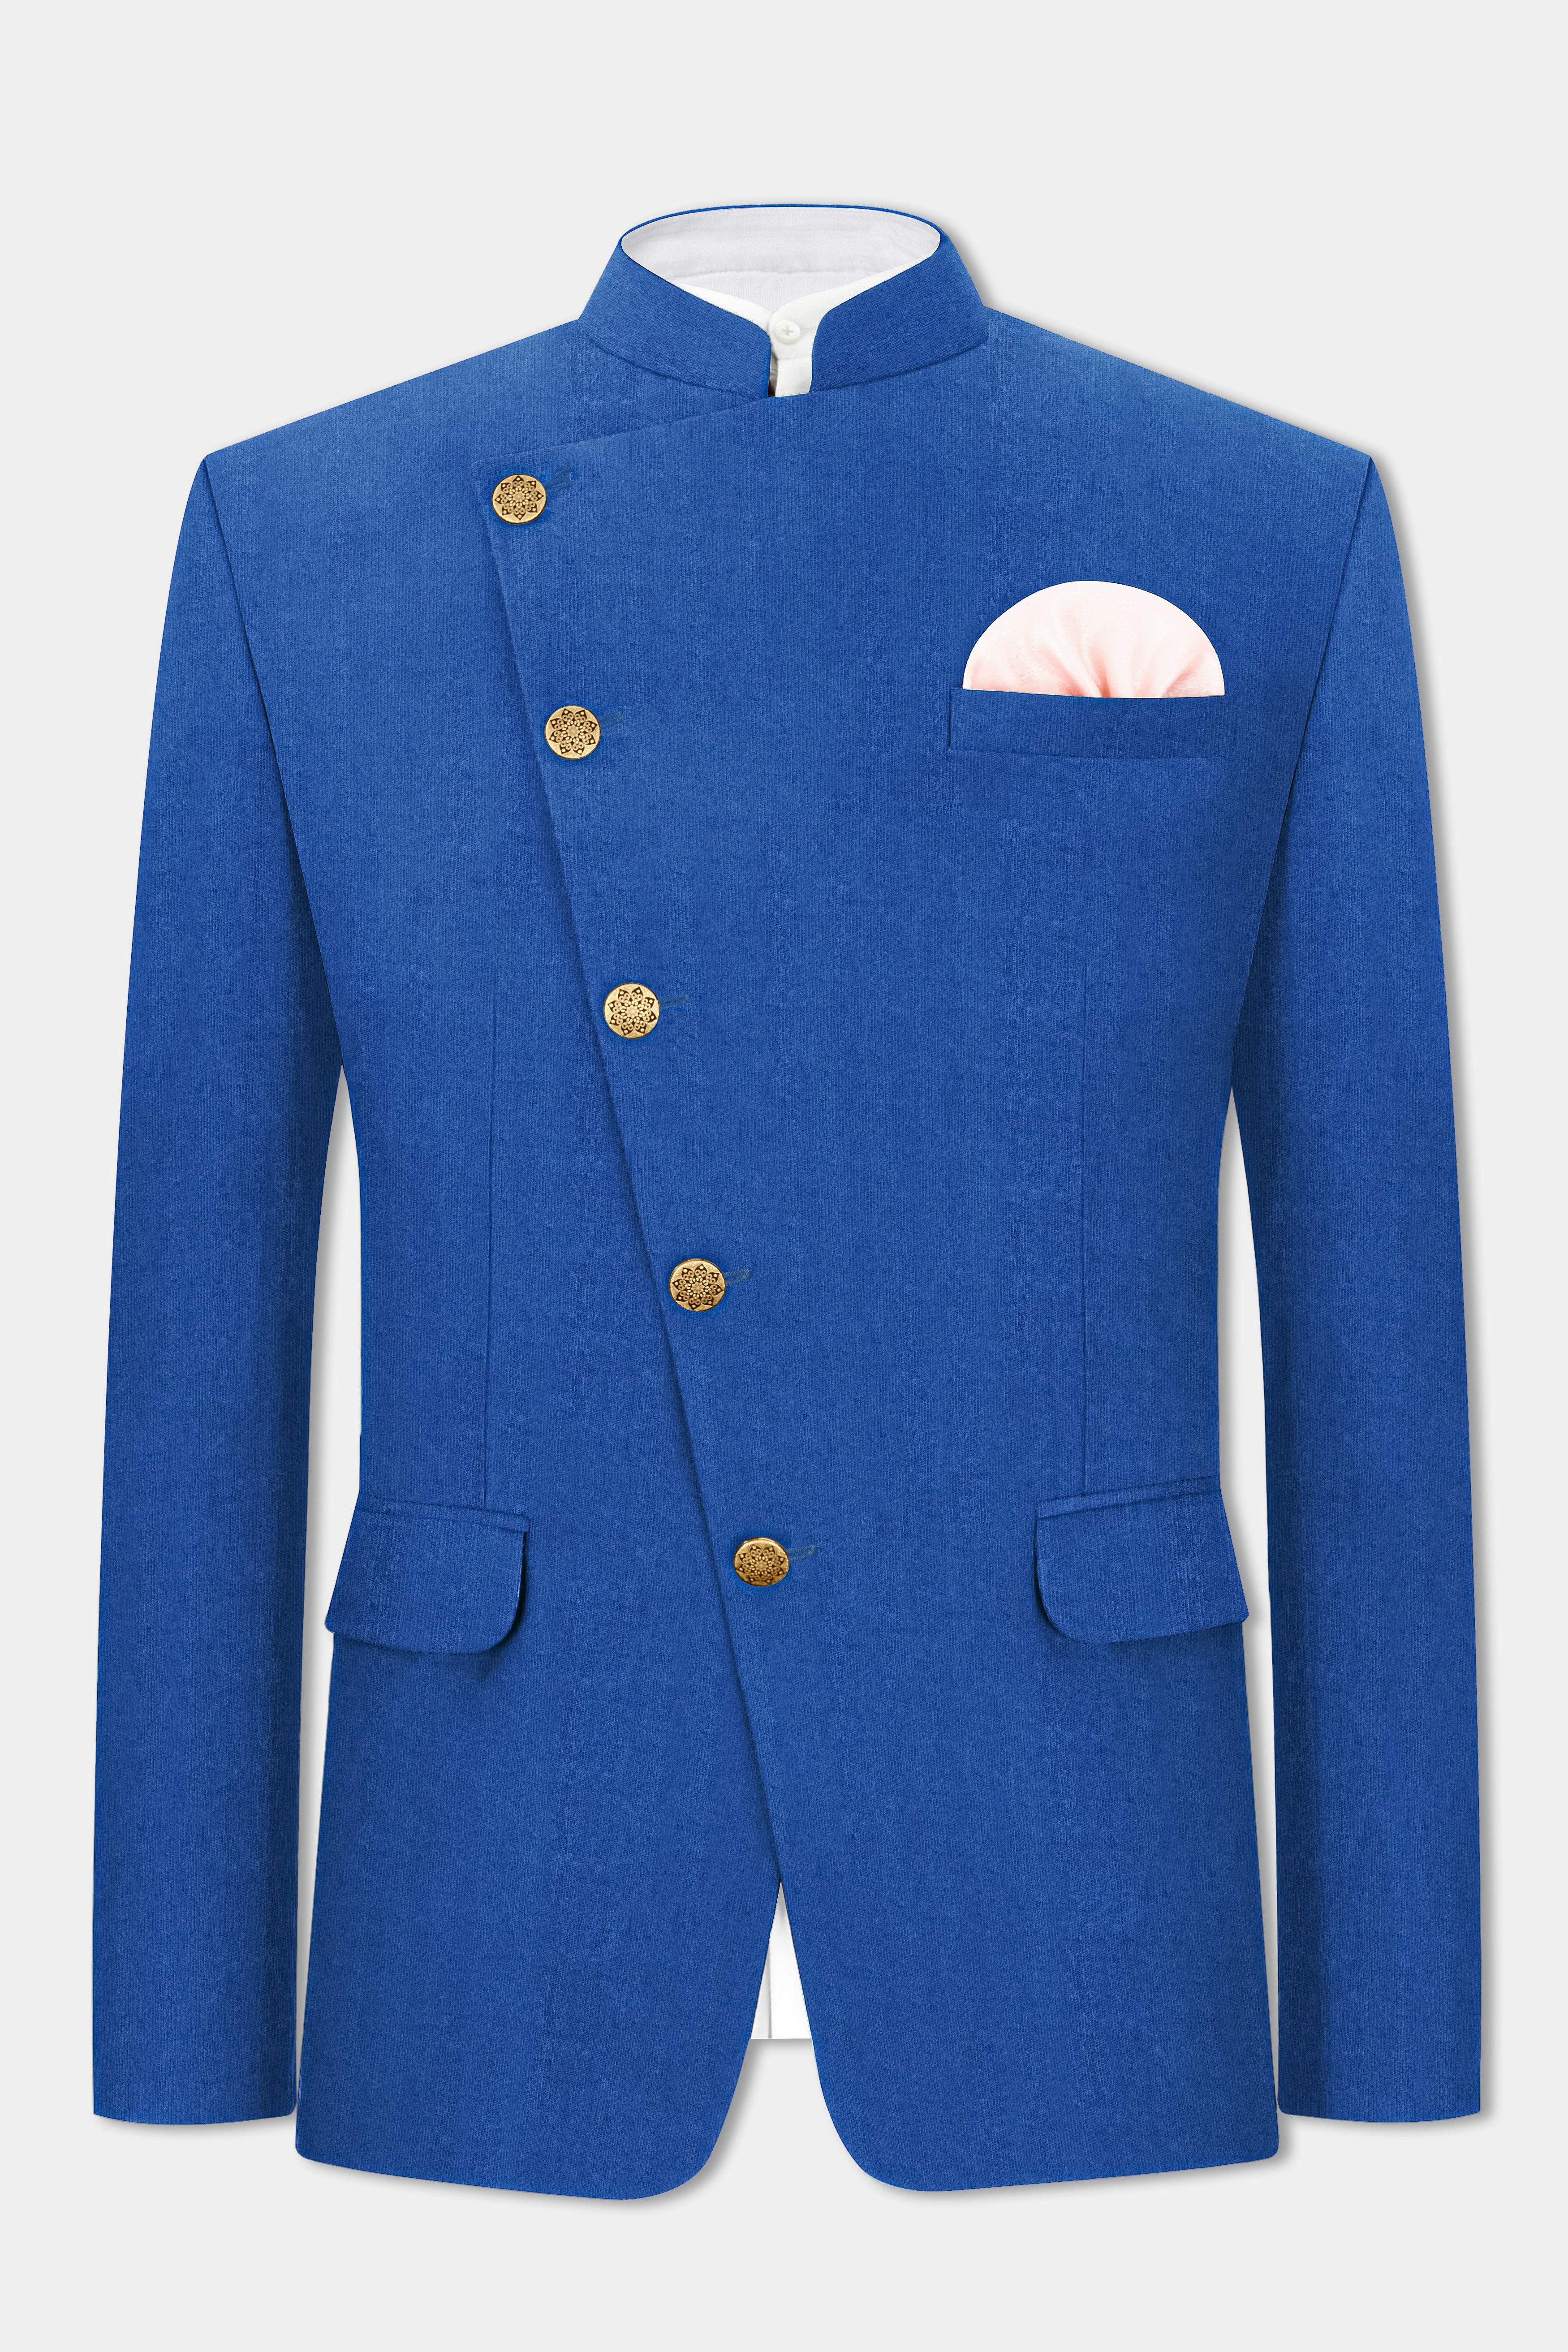 Cobalt Blue Cross Placket Bandhgala Corduroy Premium Cotton Designer Blazer